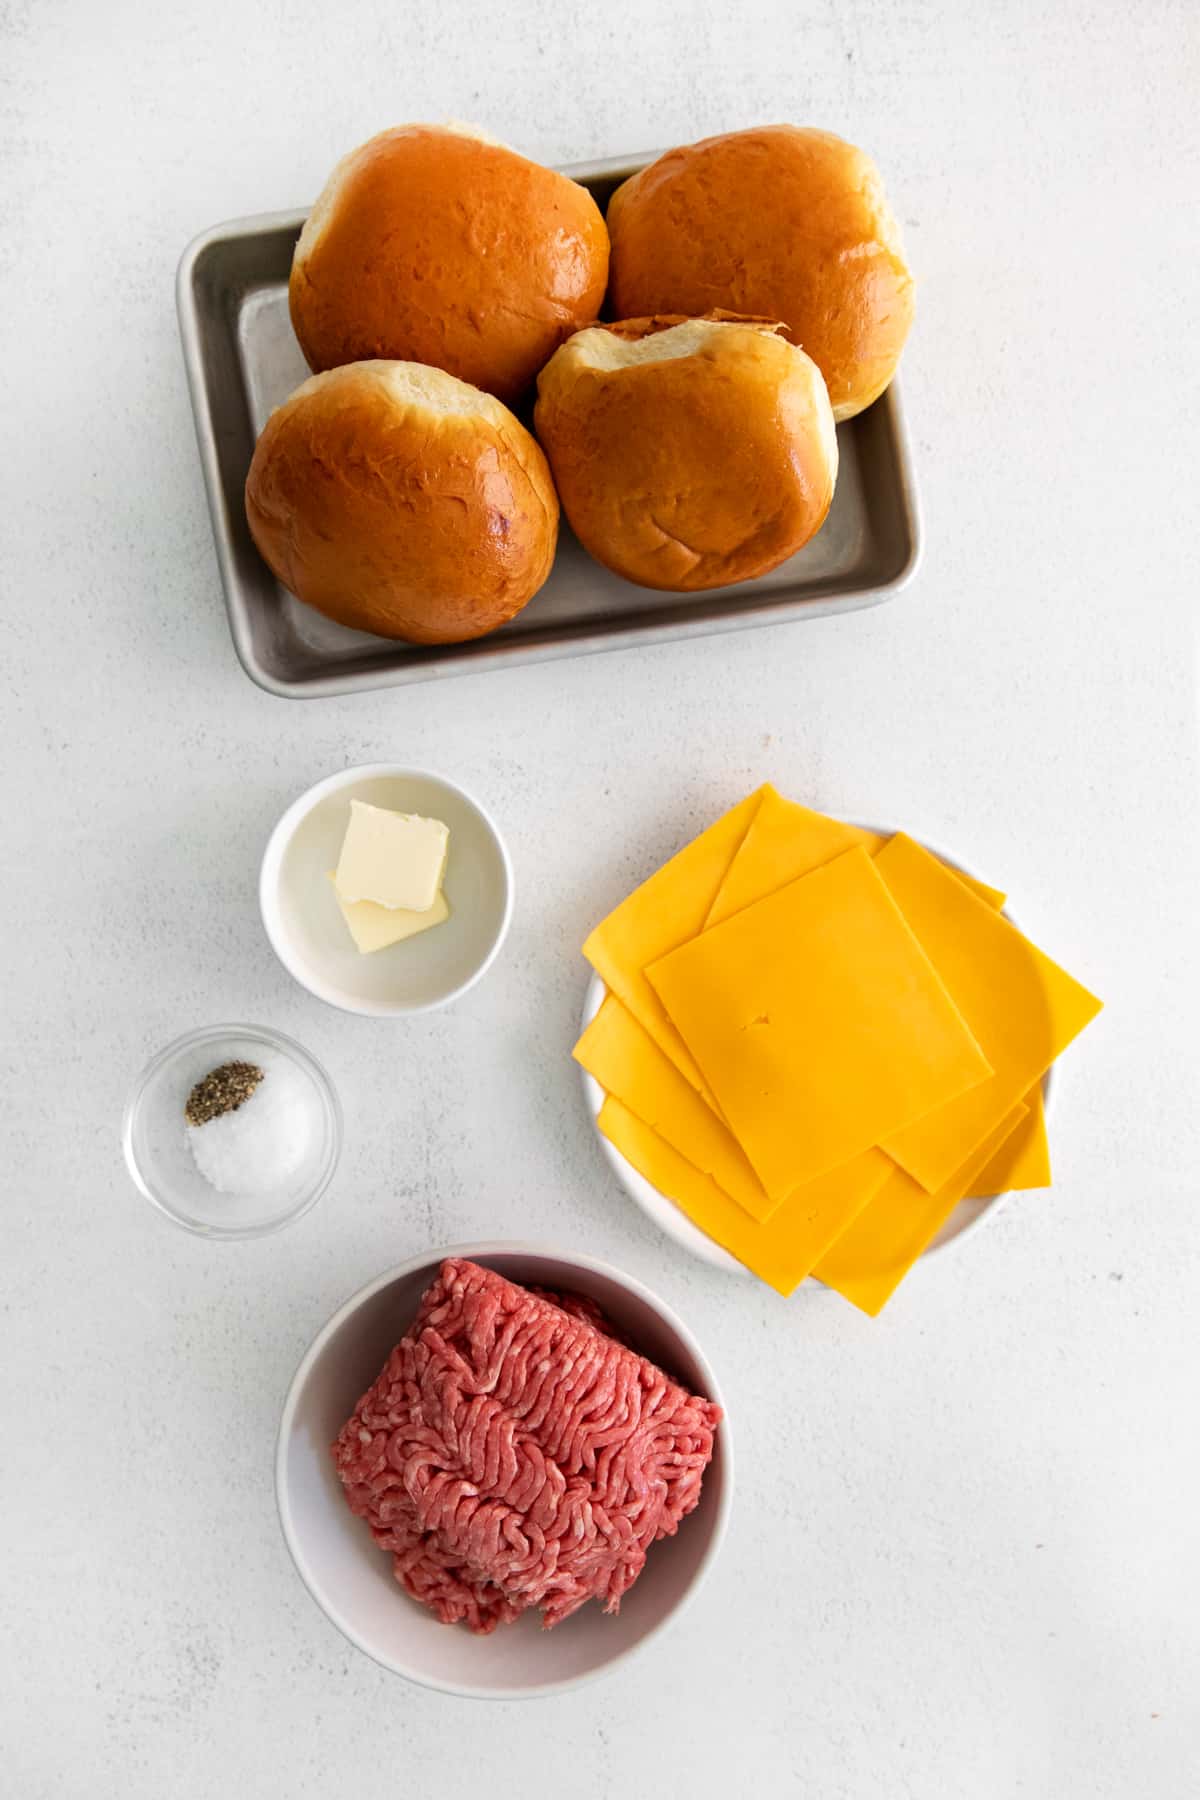 Ingredients for cheeseburgers.